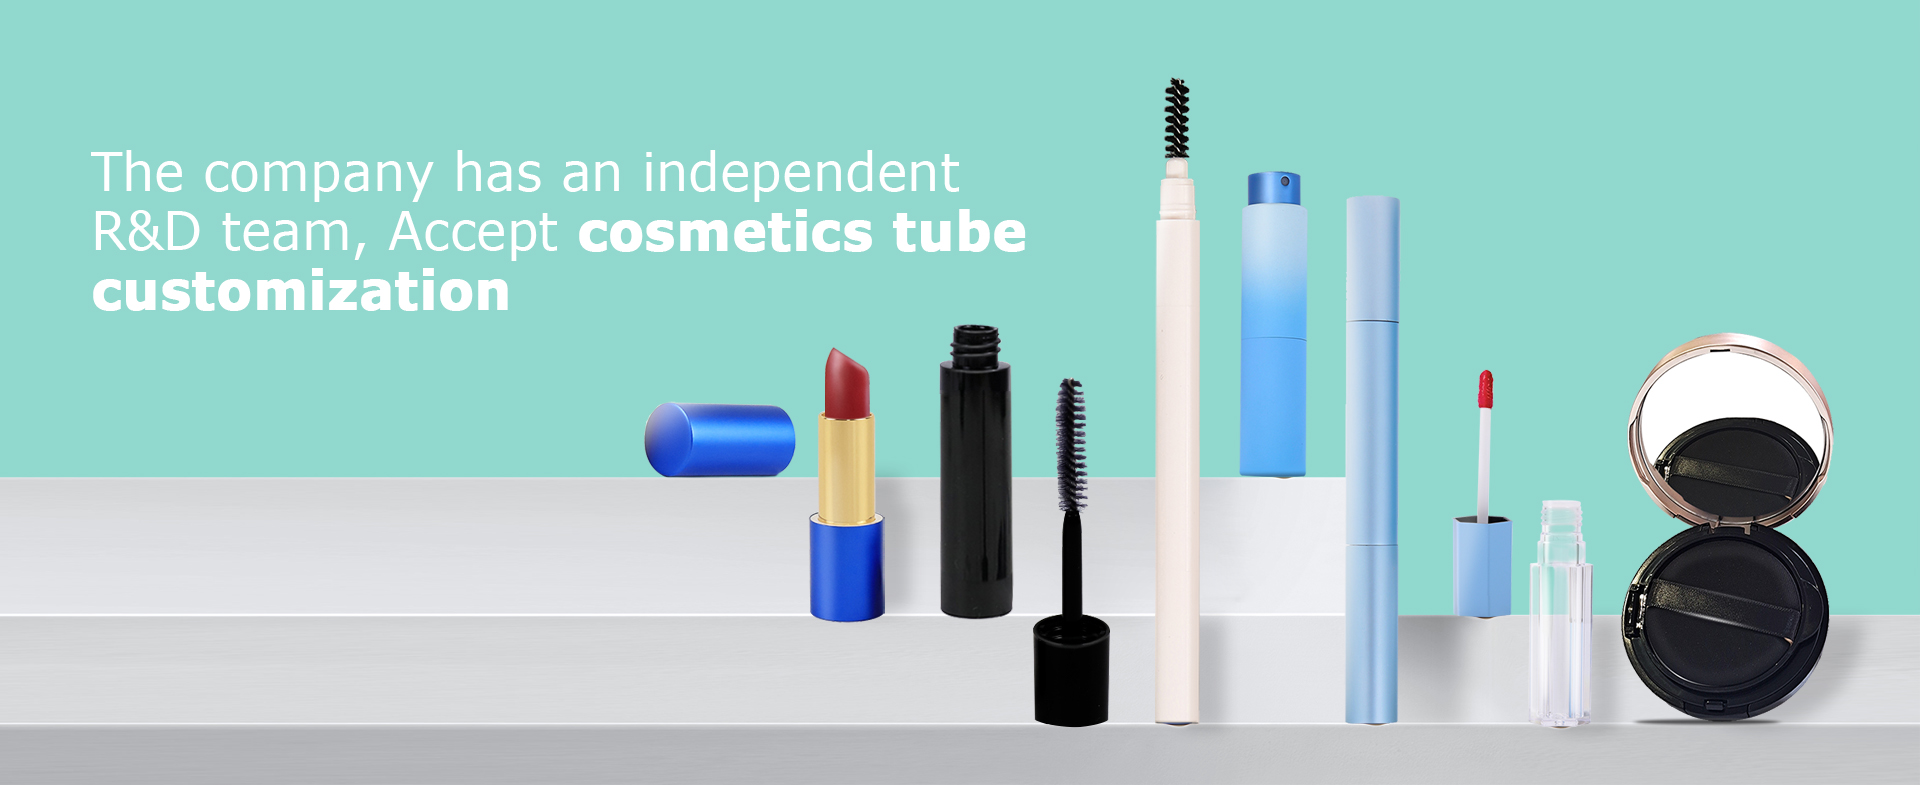 cosmetics tube customization - ivorie.jpg